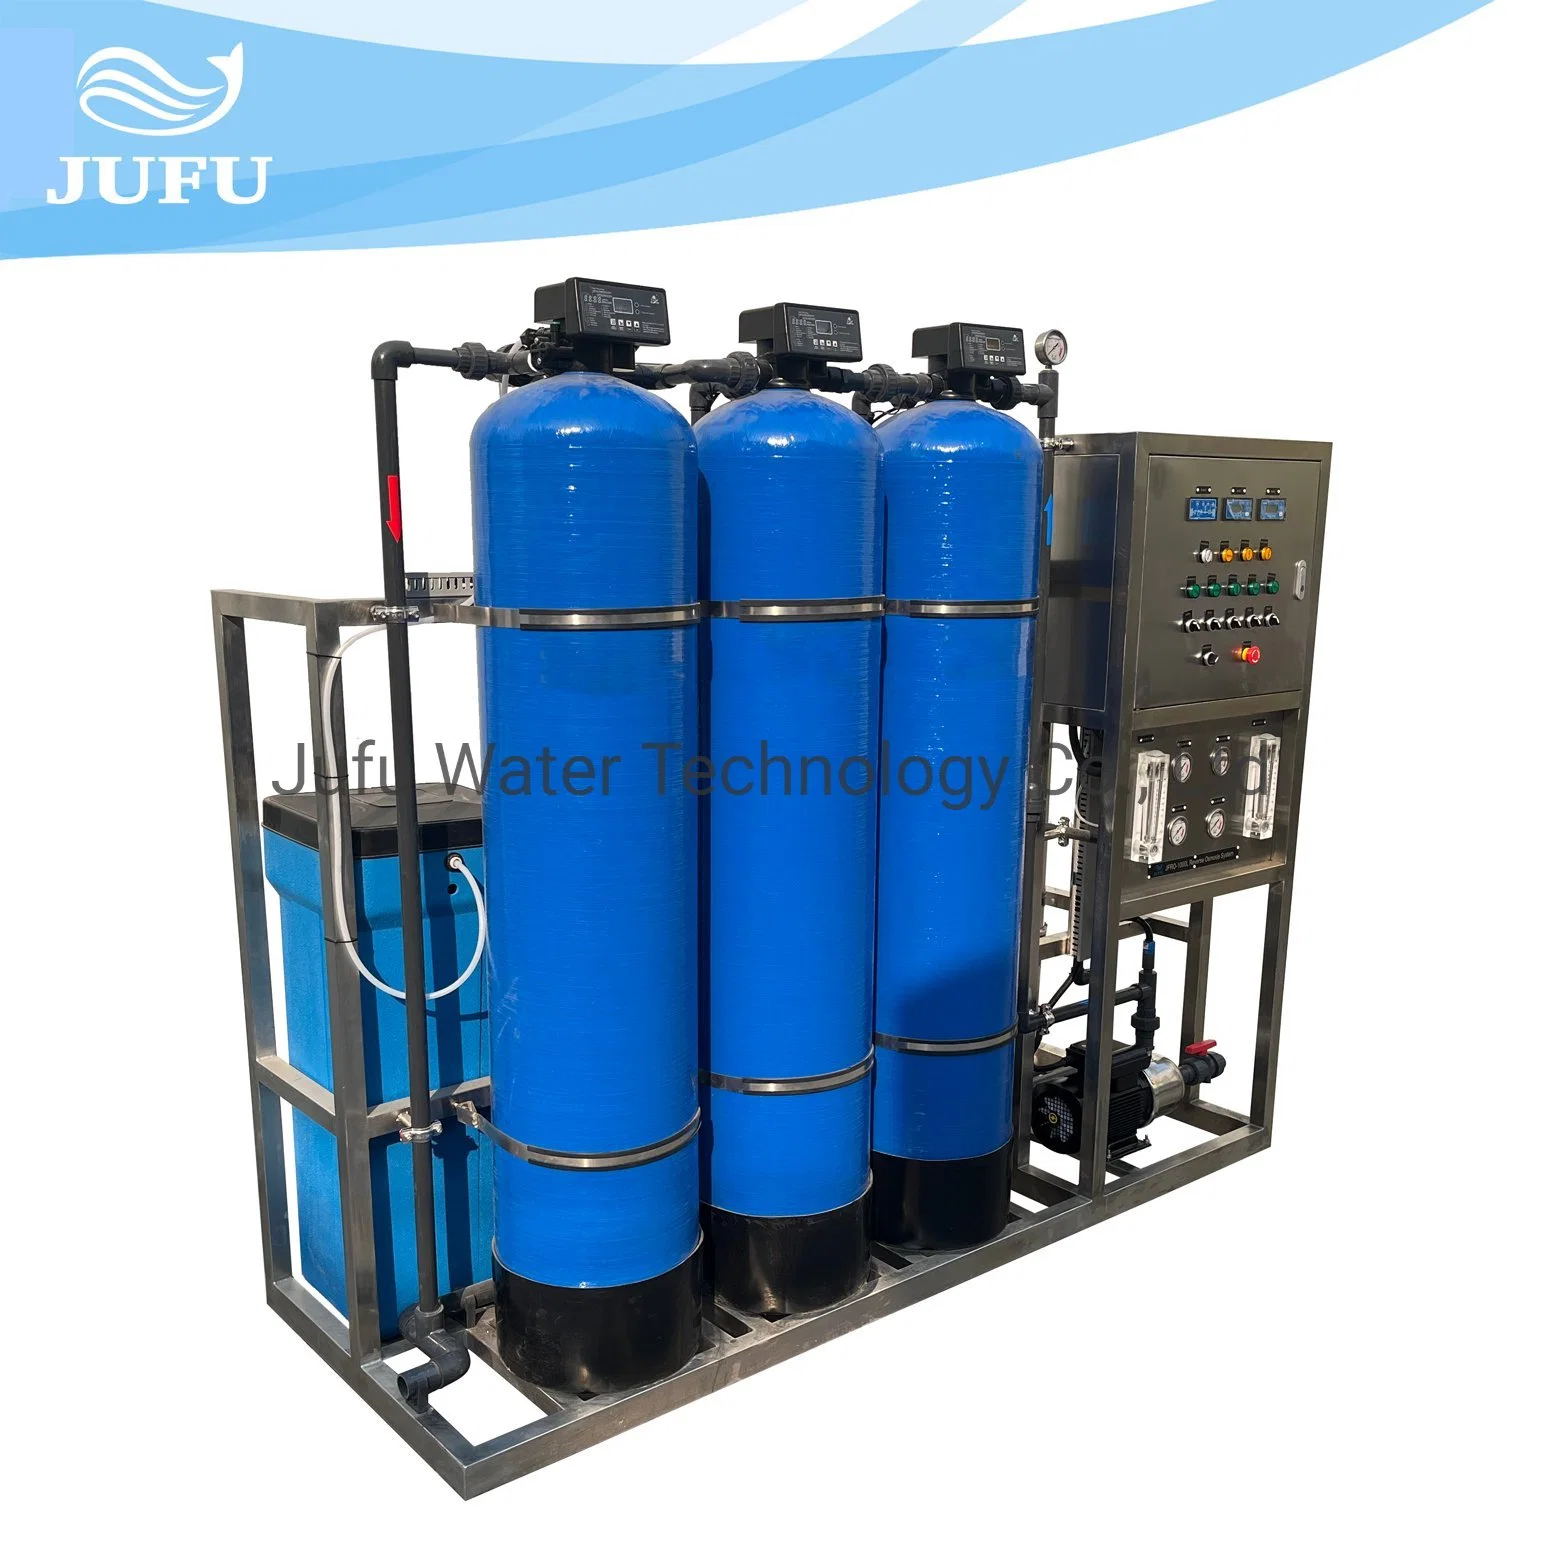 1000lph Reverse Osmosis System Water Filter Purifier Desalination Water Treatment Machine Water Purification System RO Drinking Water Treatment Plant